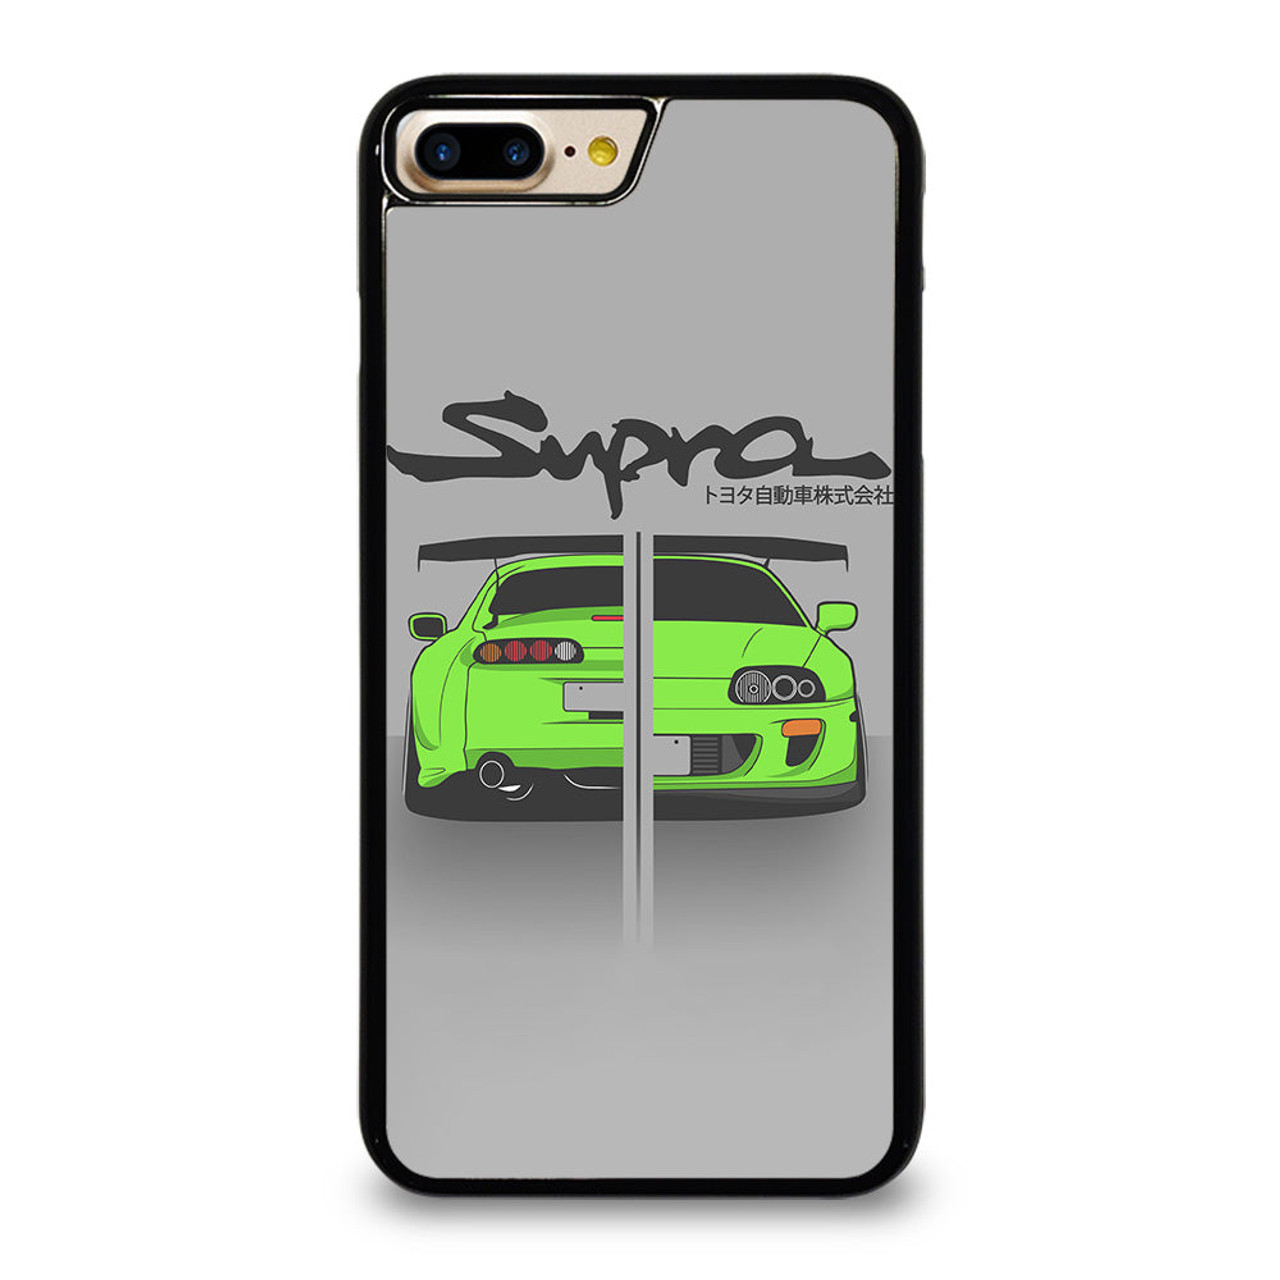 TOYOTA SUPRA CAR CLIPART iPhone 7 / 8 Plus Case Cover